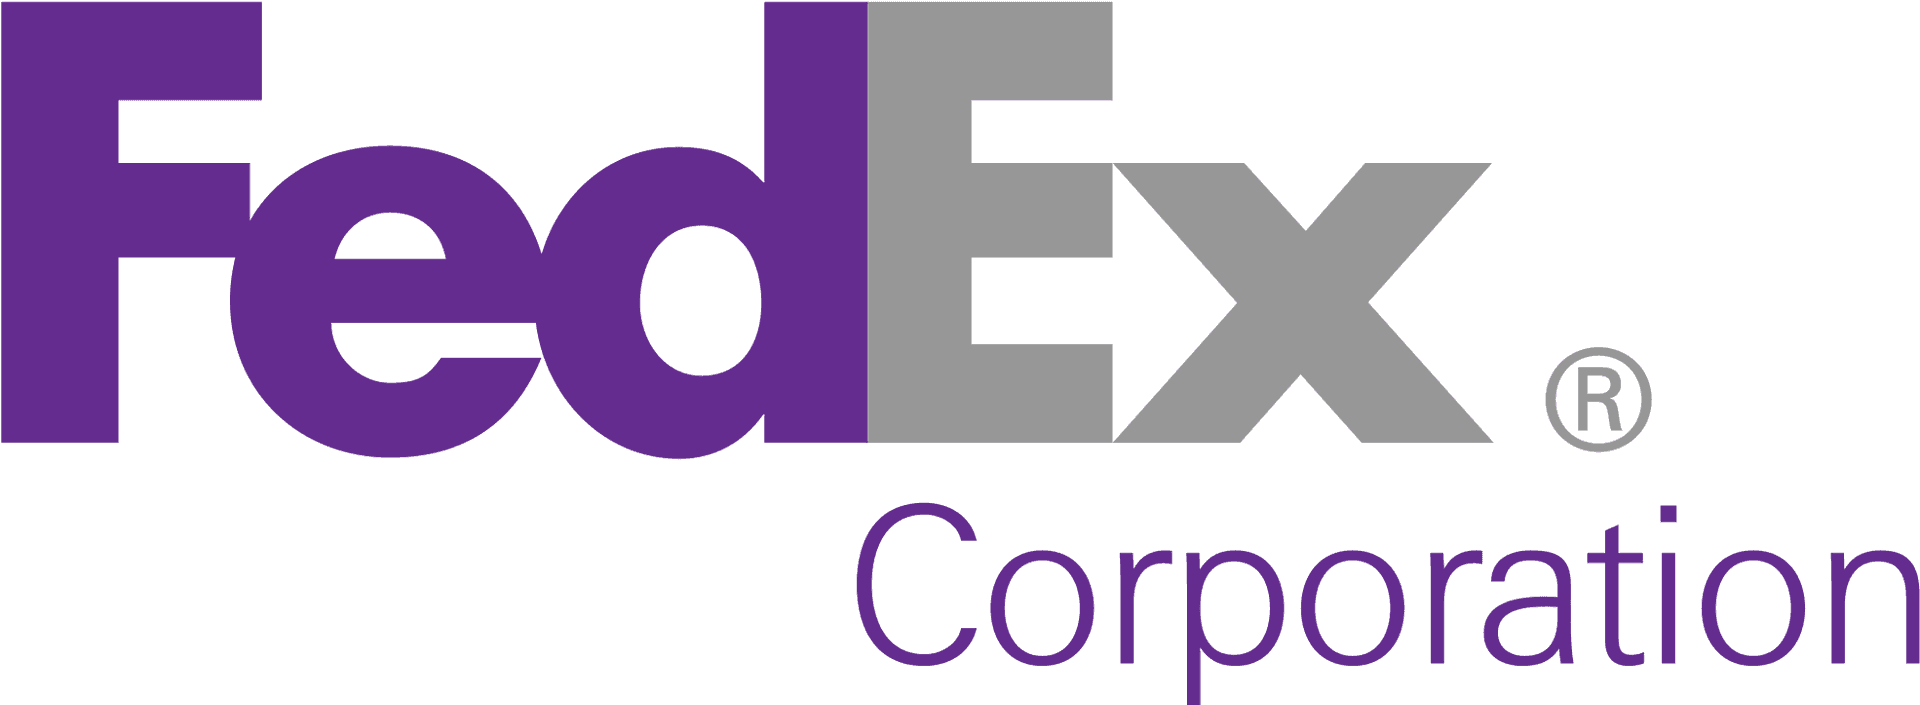 Fed Ex Corporation Logo PNG